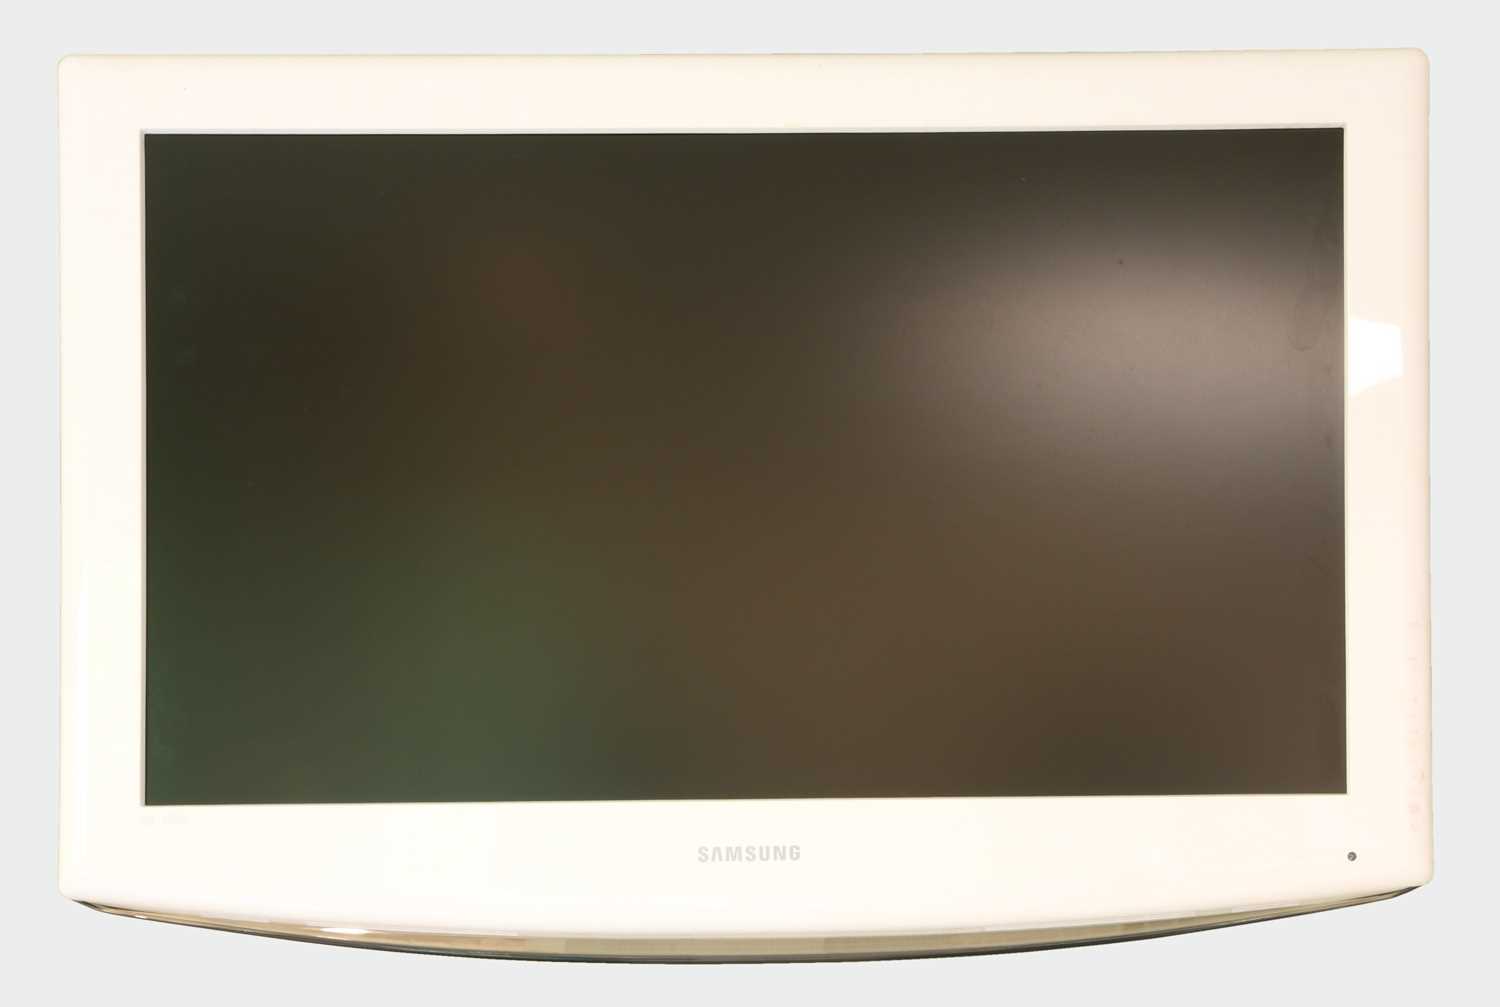 Lot 168 - 32" Samsung LCD TV